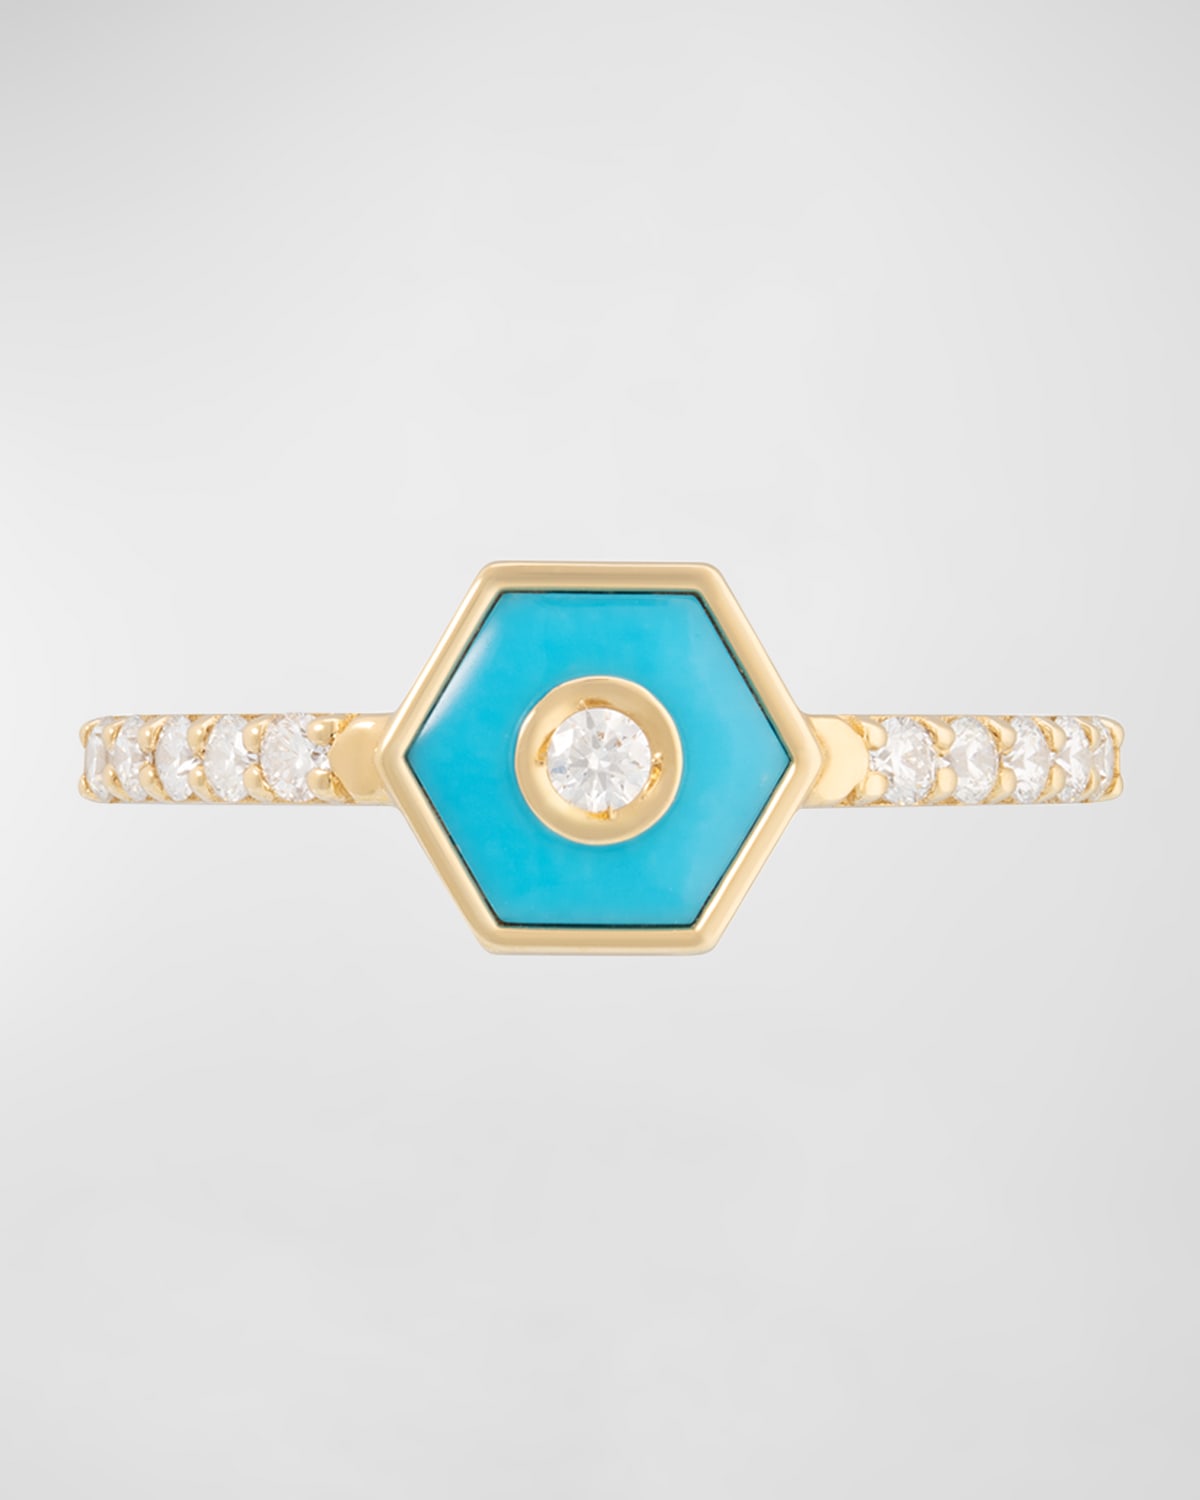 Miseno Baia Sommersa 18k Yellow Gold Ring With Lapis And Diamonds